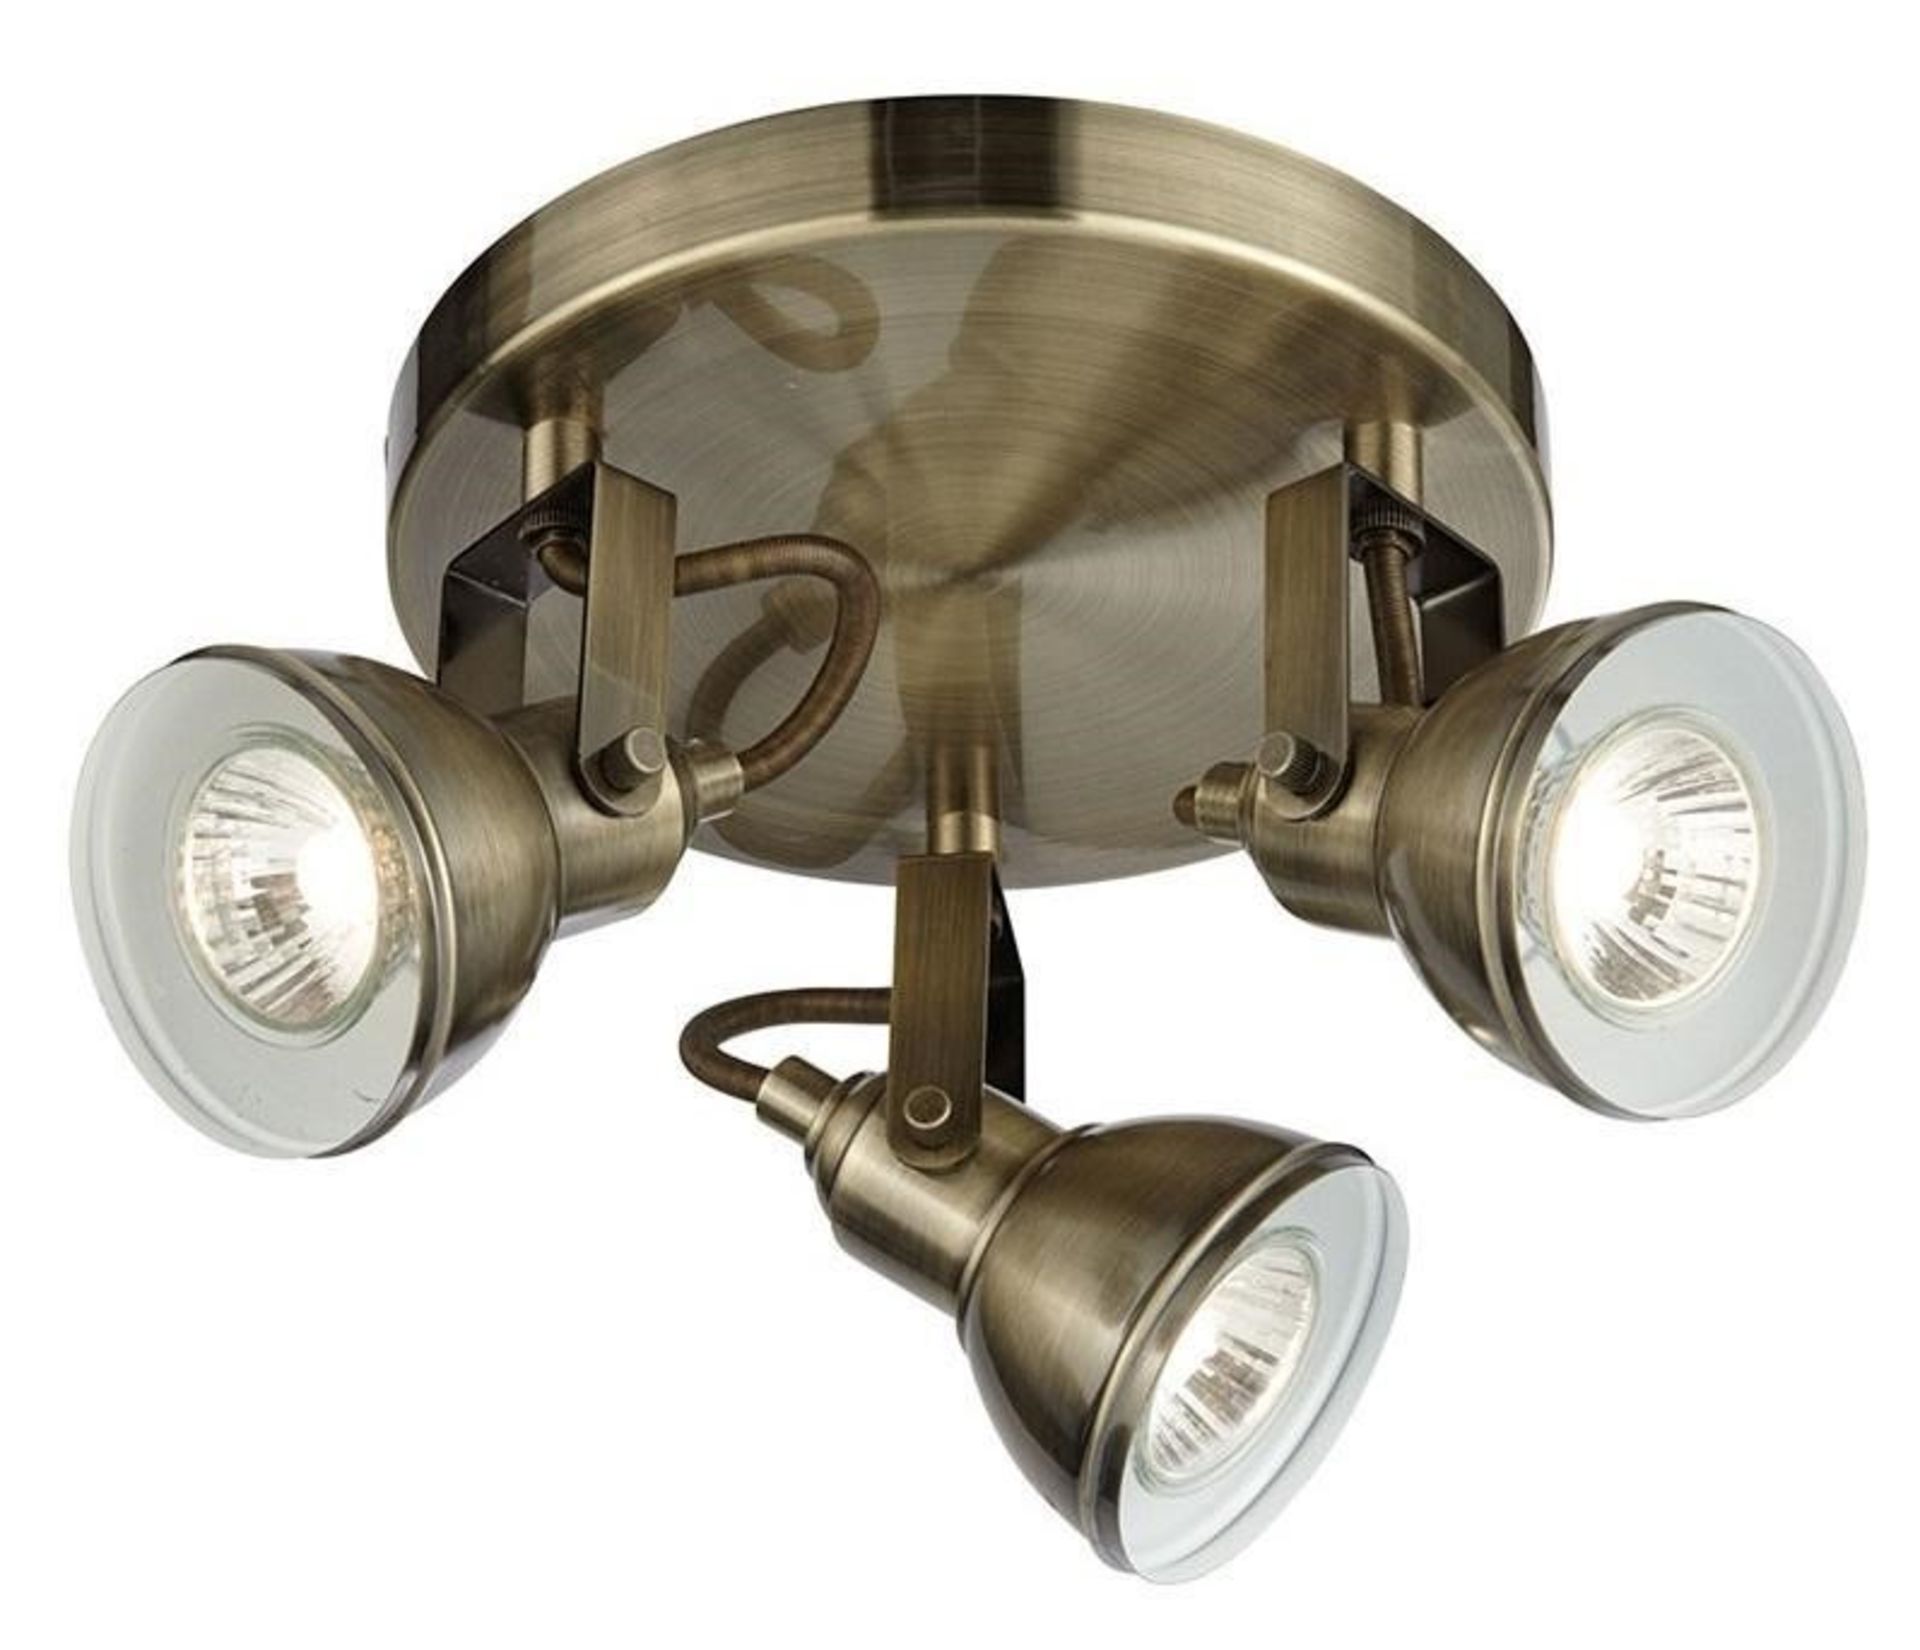 1 x Focus Antique Brass Trio Industrial Spotlight - Ex Display Stock - CL298 - Ref J306 - Location: